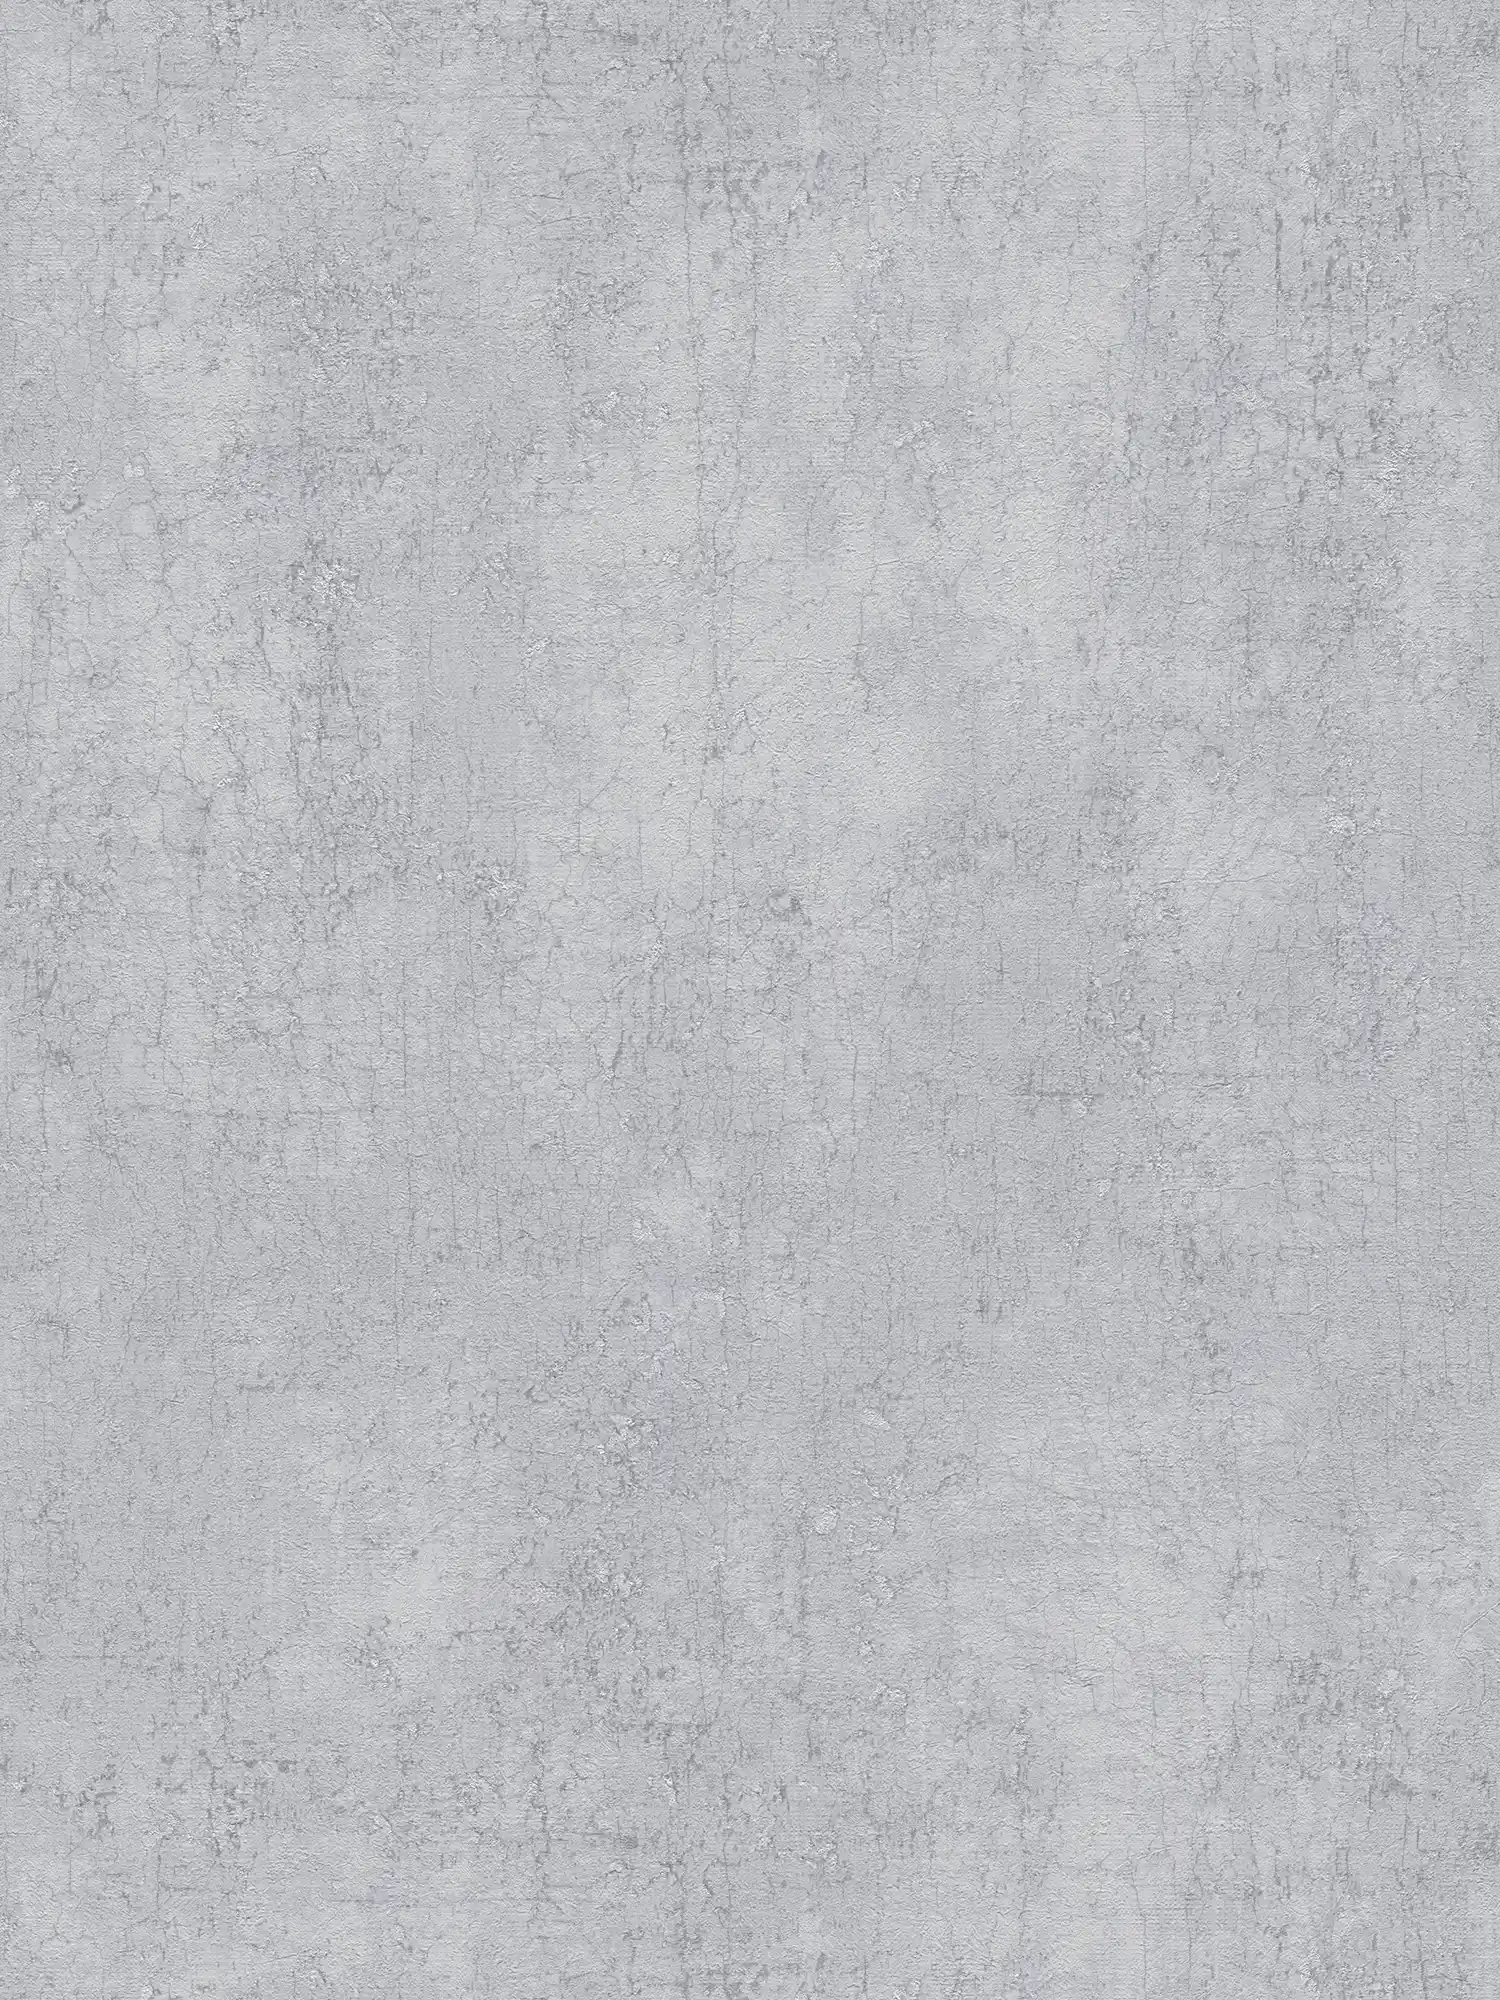 Plaster optics wallpaper stone grey with silver accents - grey, metallic
